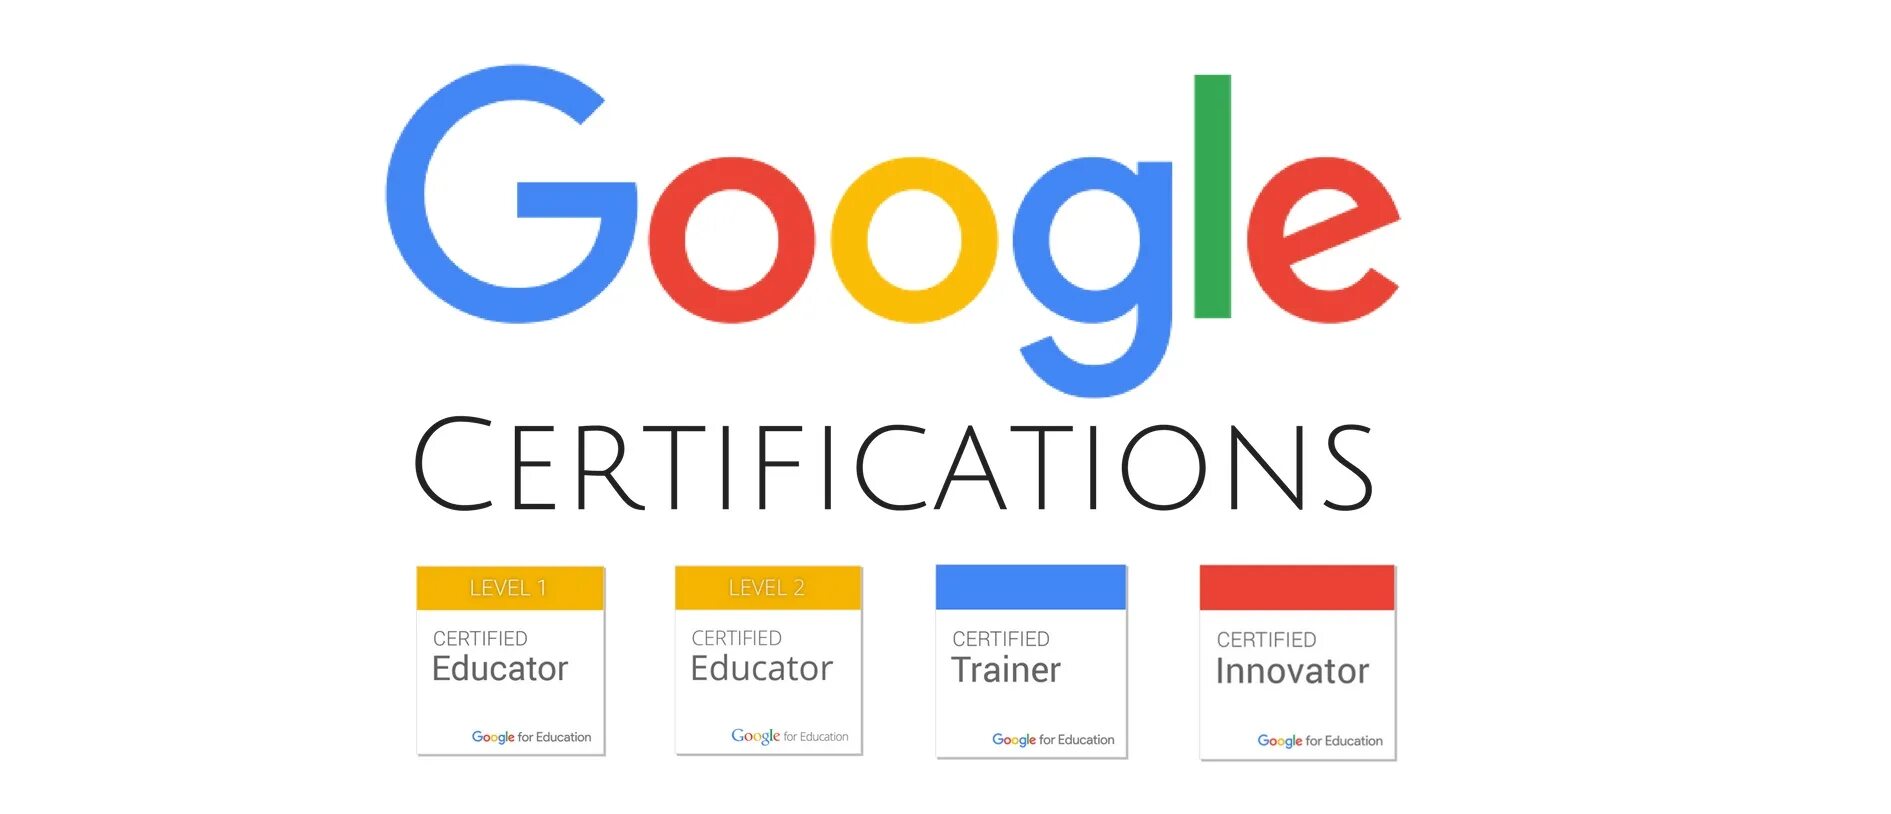 Google certified. Google certified educator. Google Education Certification. Google for Education Level 1 Certificate.